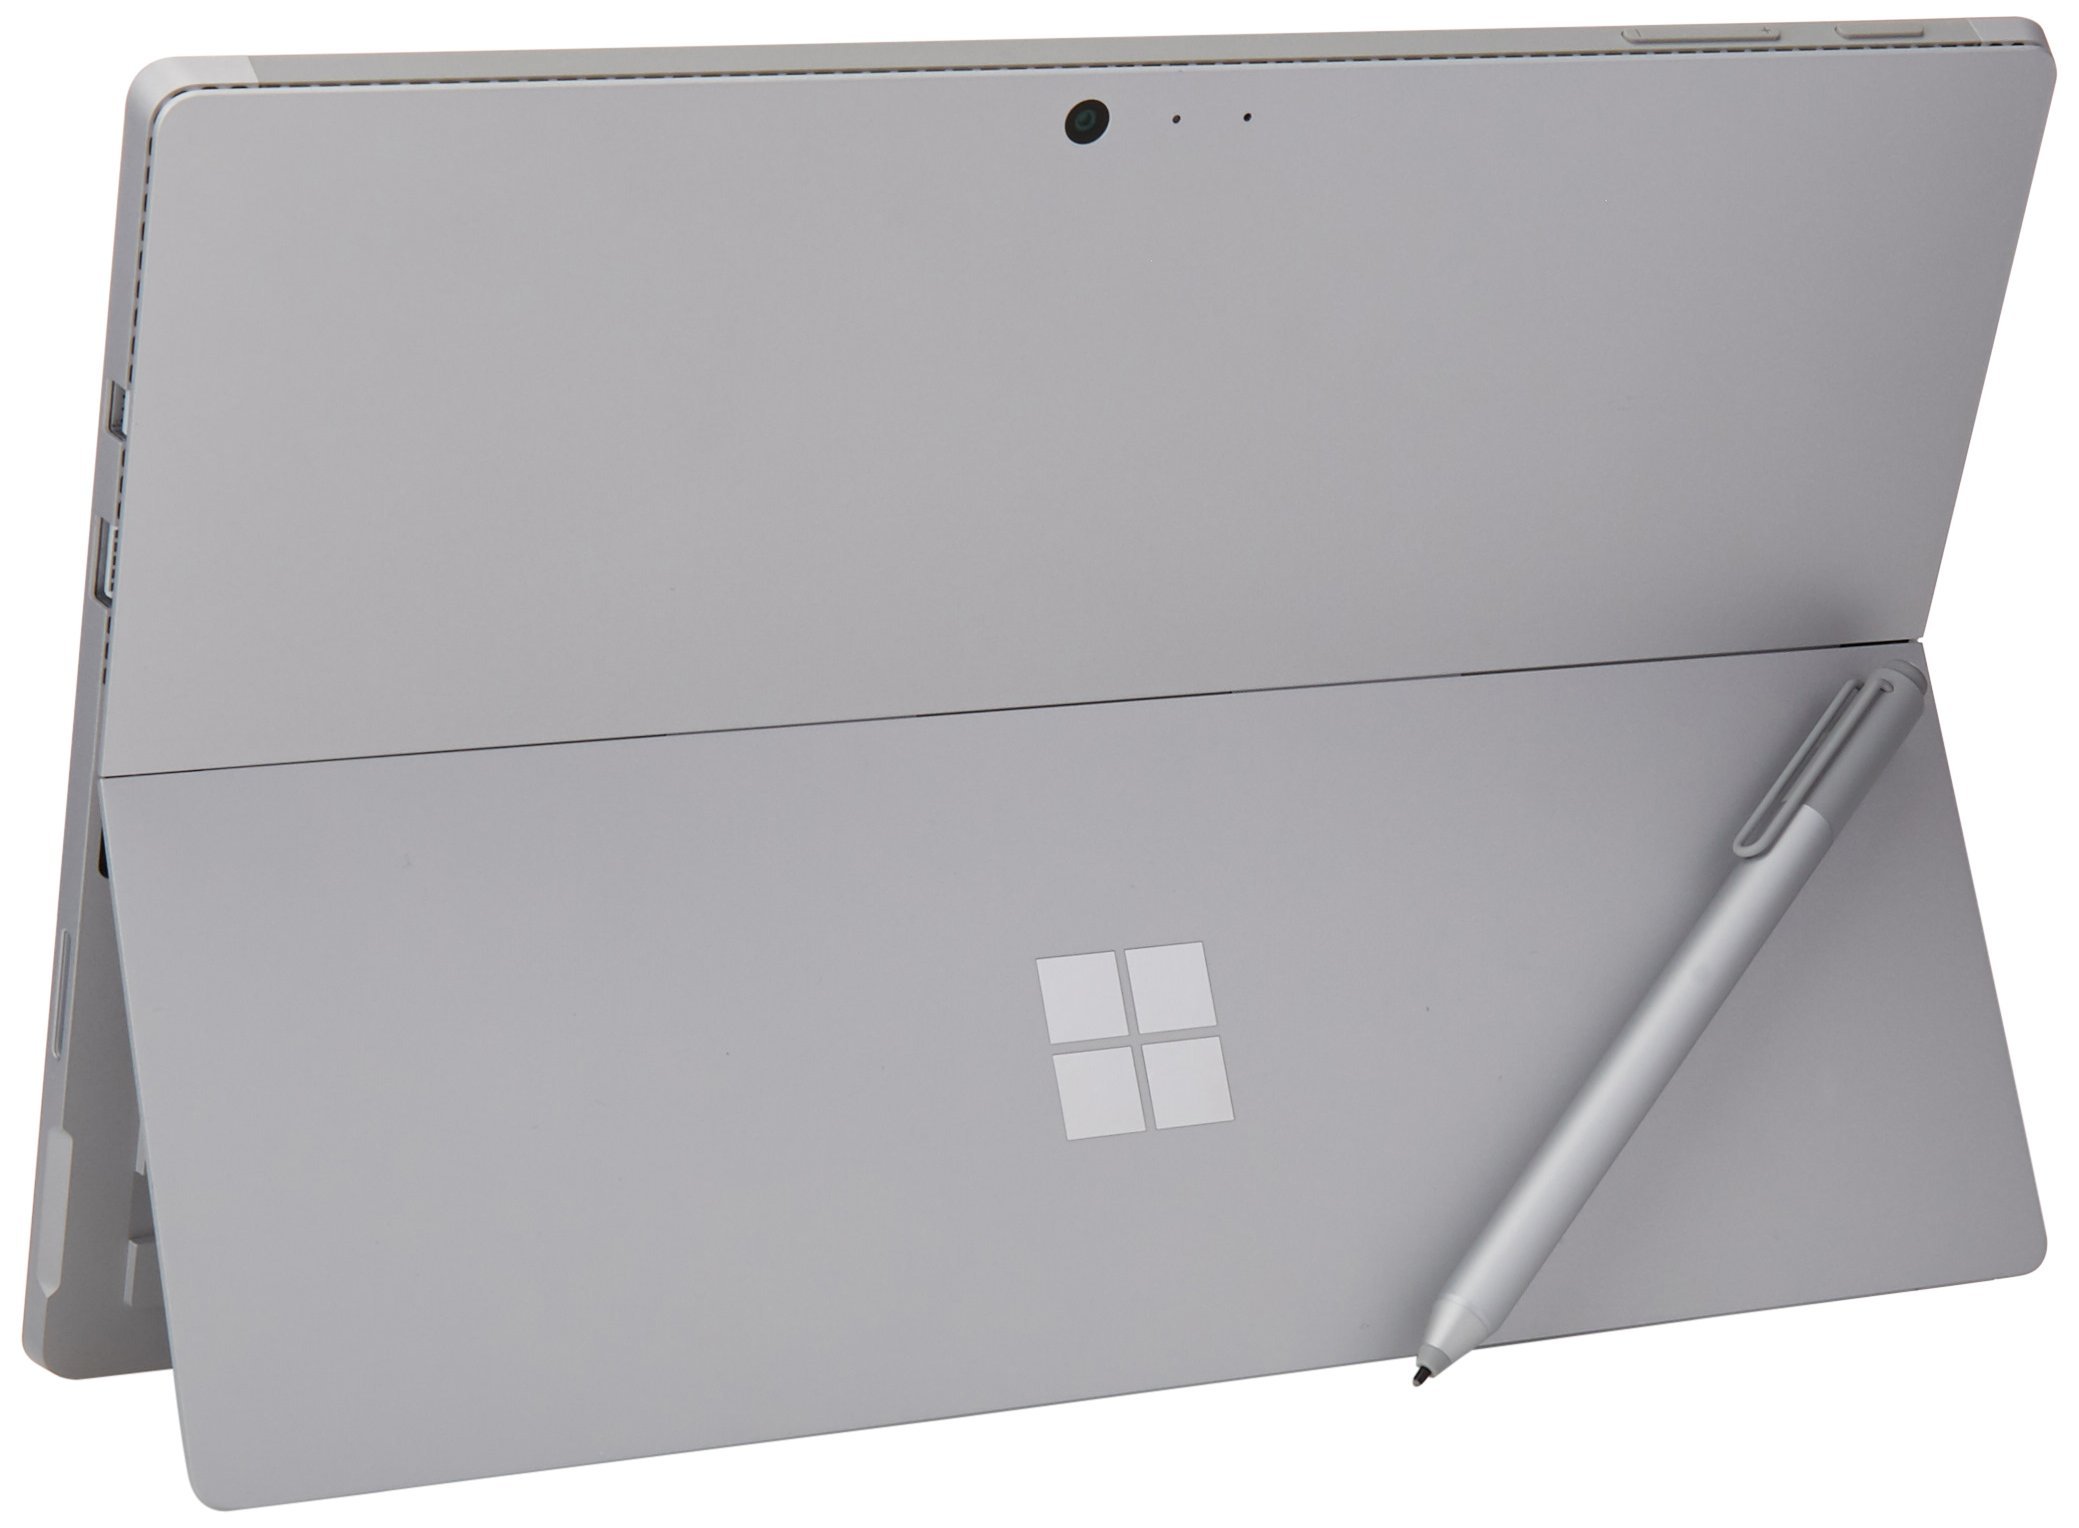 Microsoft Surface Pro 4 (12.3) 256GB/8GB Intel i5-6300U 2.4GHz Tablet PC 1724 (Renewed)